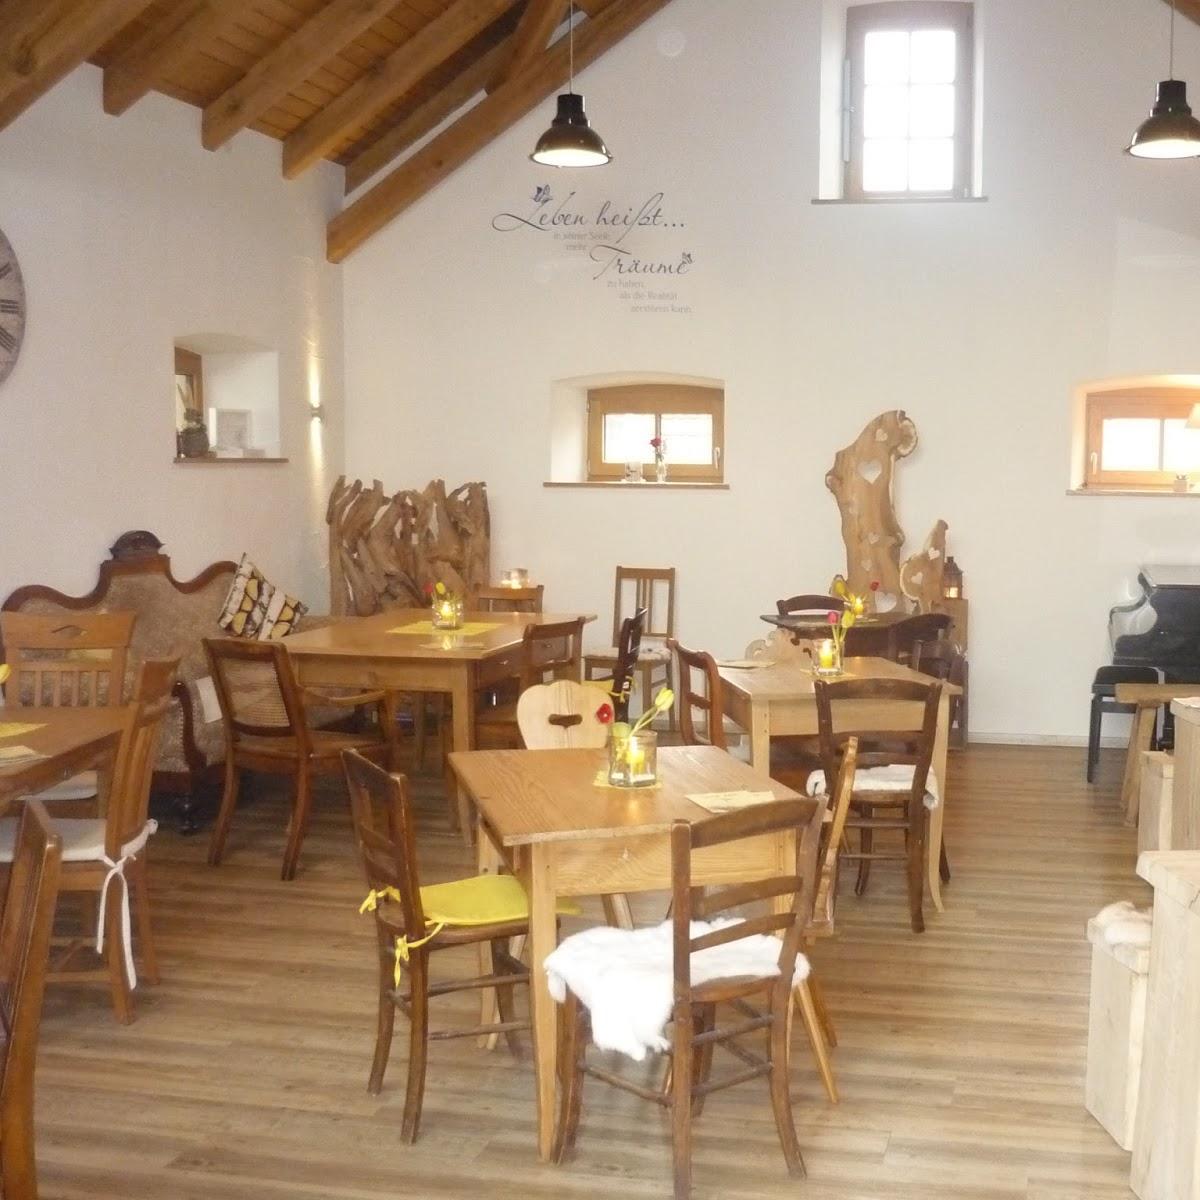 Restaurant "Café Leo" in Riedbach